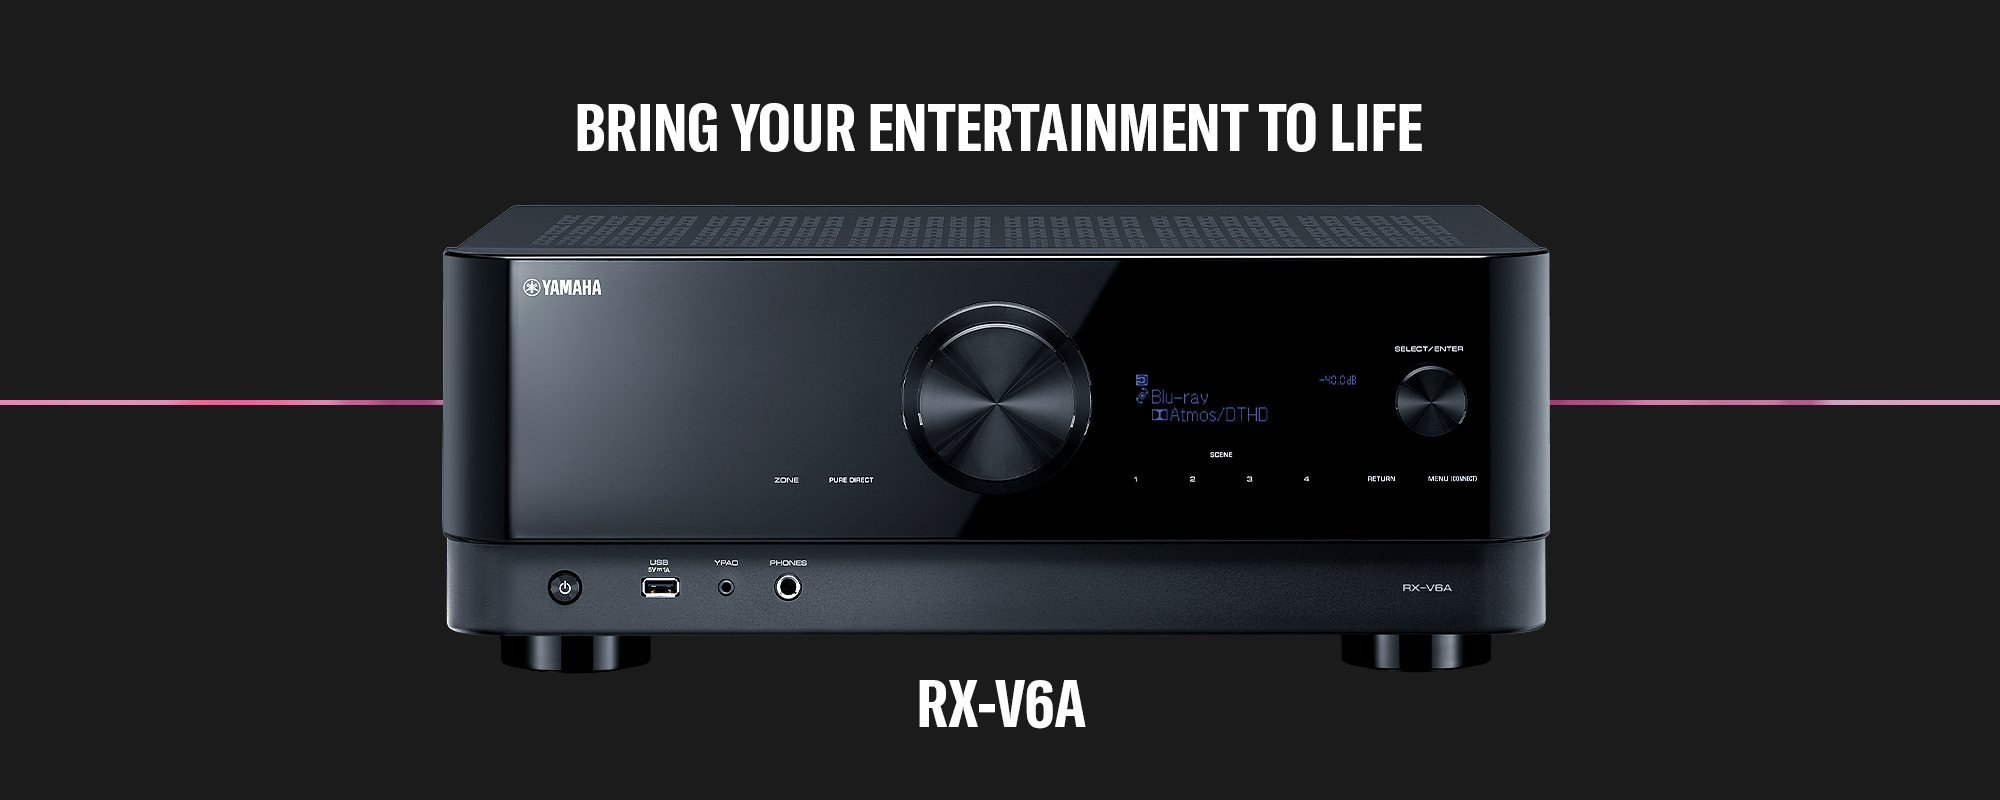 Bring Your Entertainment To Life - Yamaha RX-V6A Receiver Header - Desktop